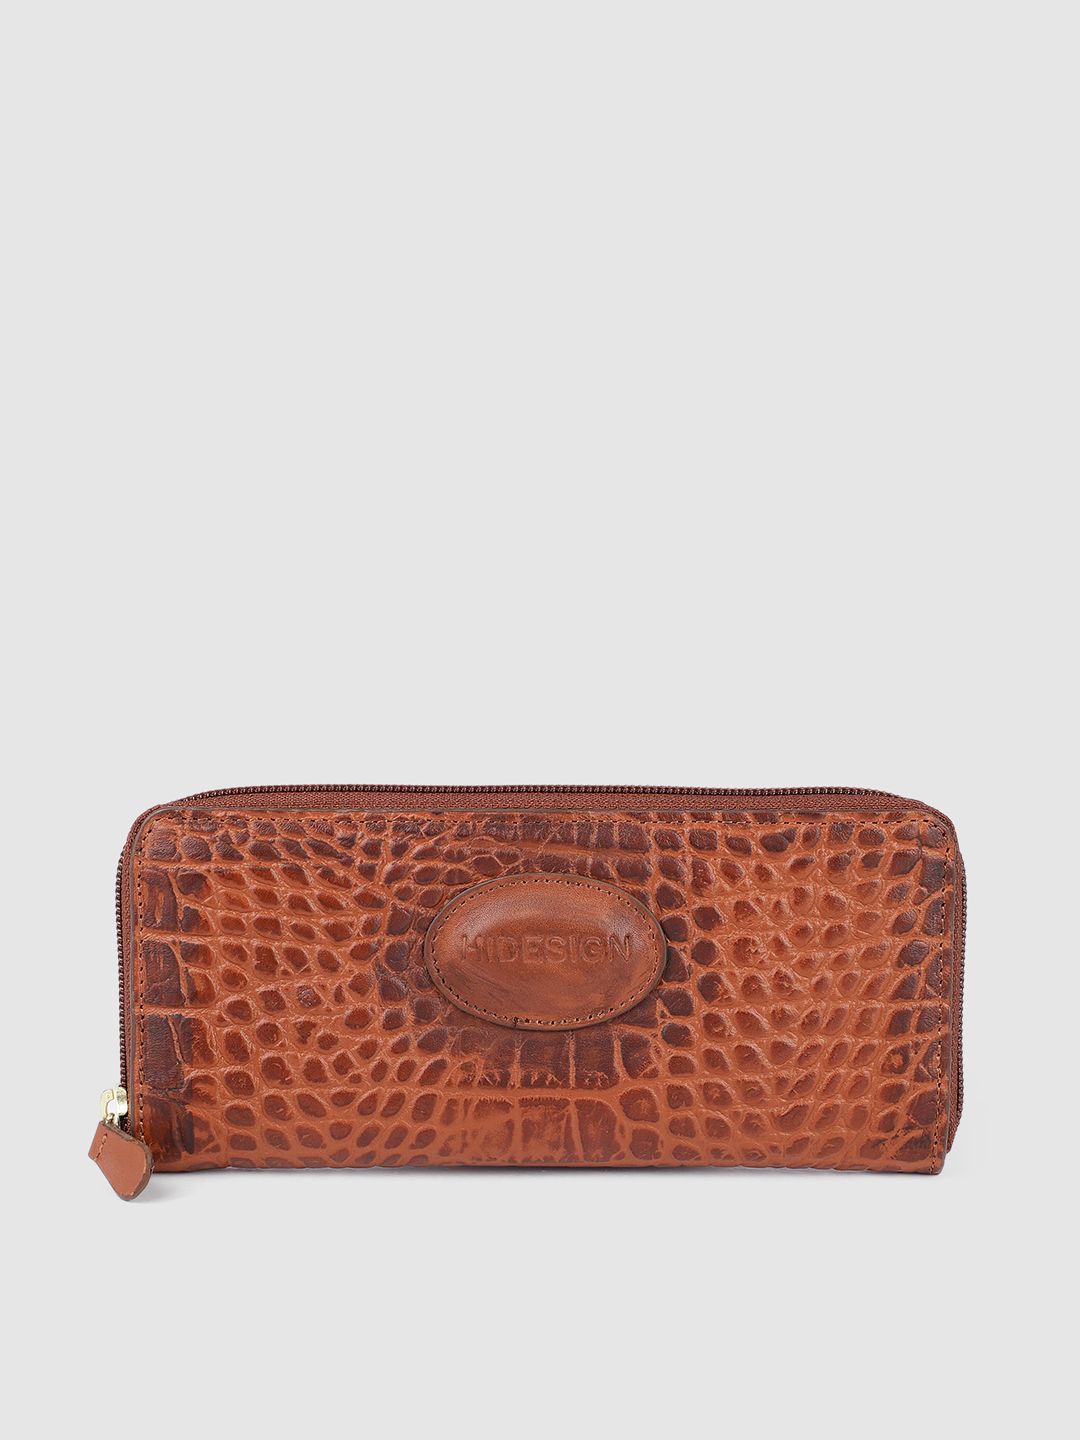 Hidesign Women Tan Brown Textured Leather Zip Around Wallet Price in India